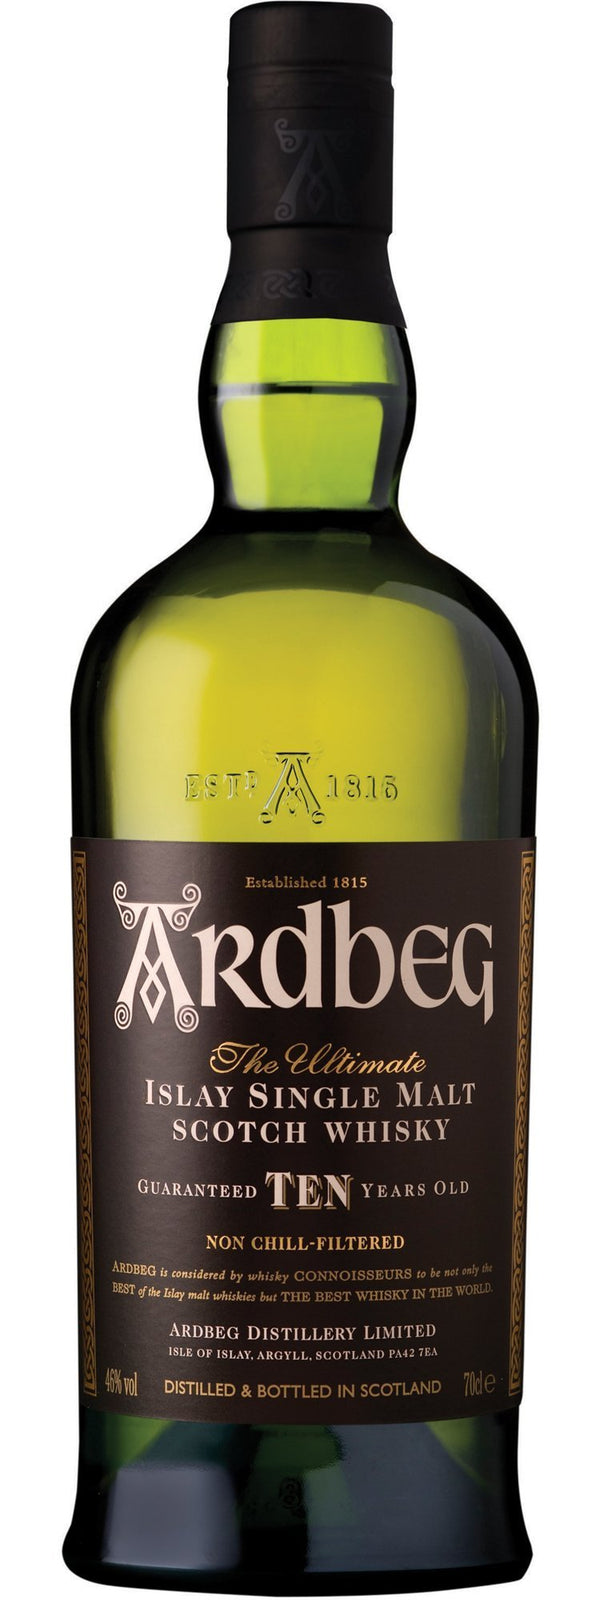 Ardbeg, whisky, single malt - Wines & Spirits - LVMH